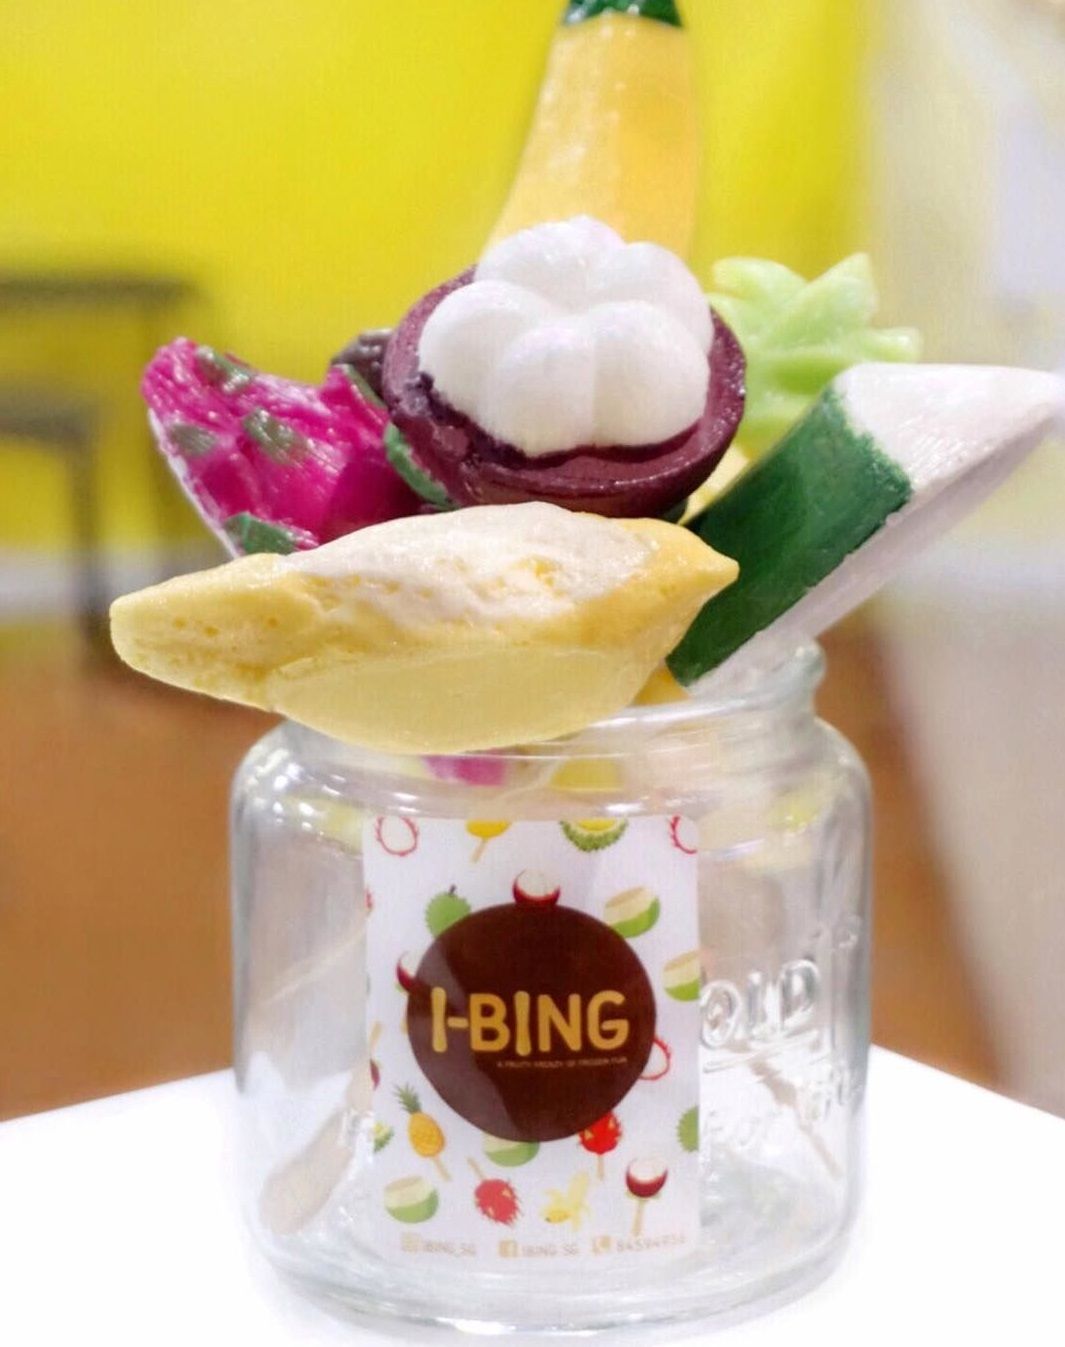 New Restaurants Mar 2018 - I-Bing in a jar